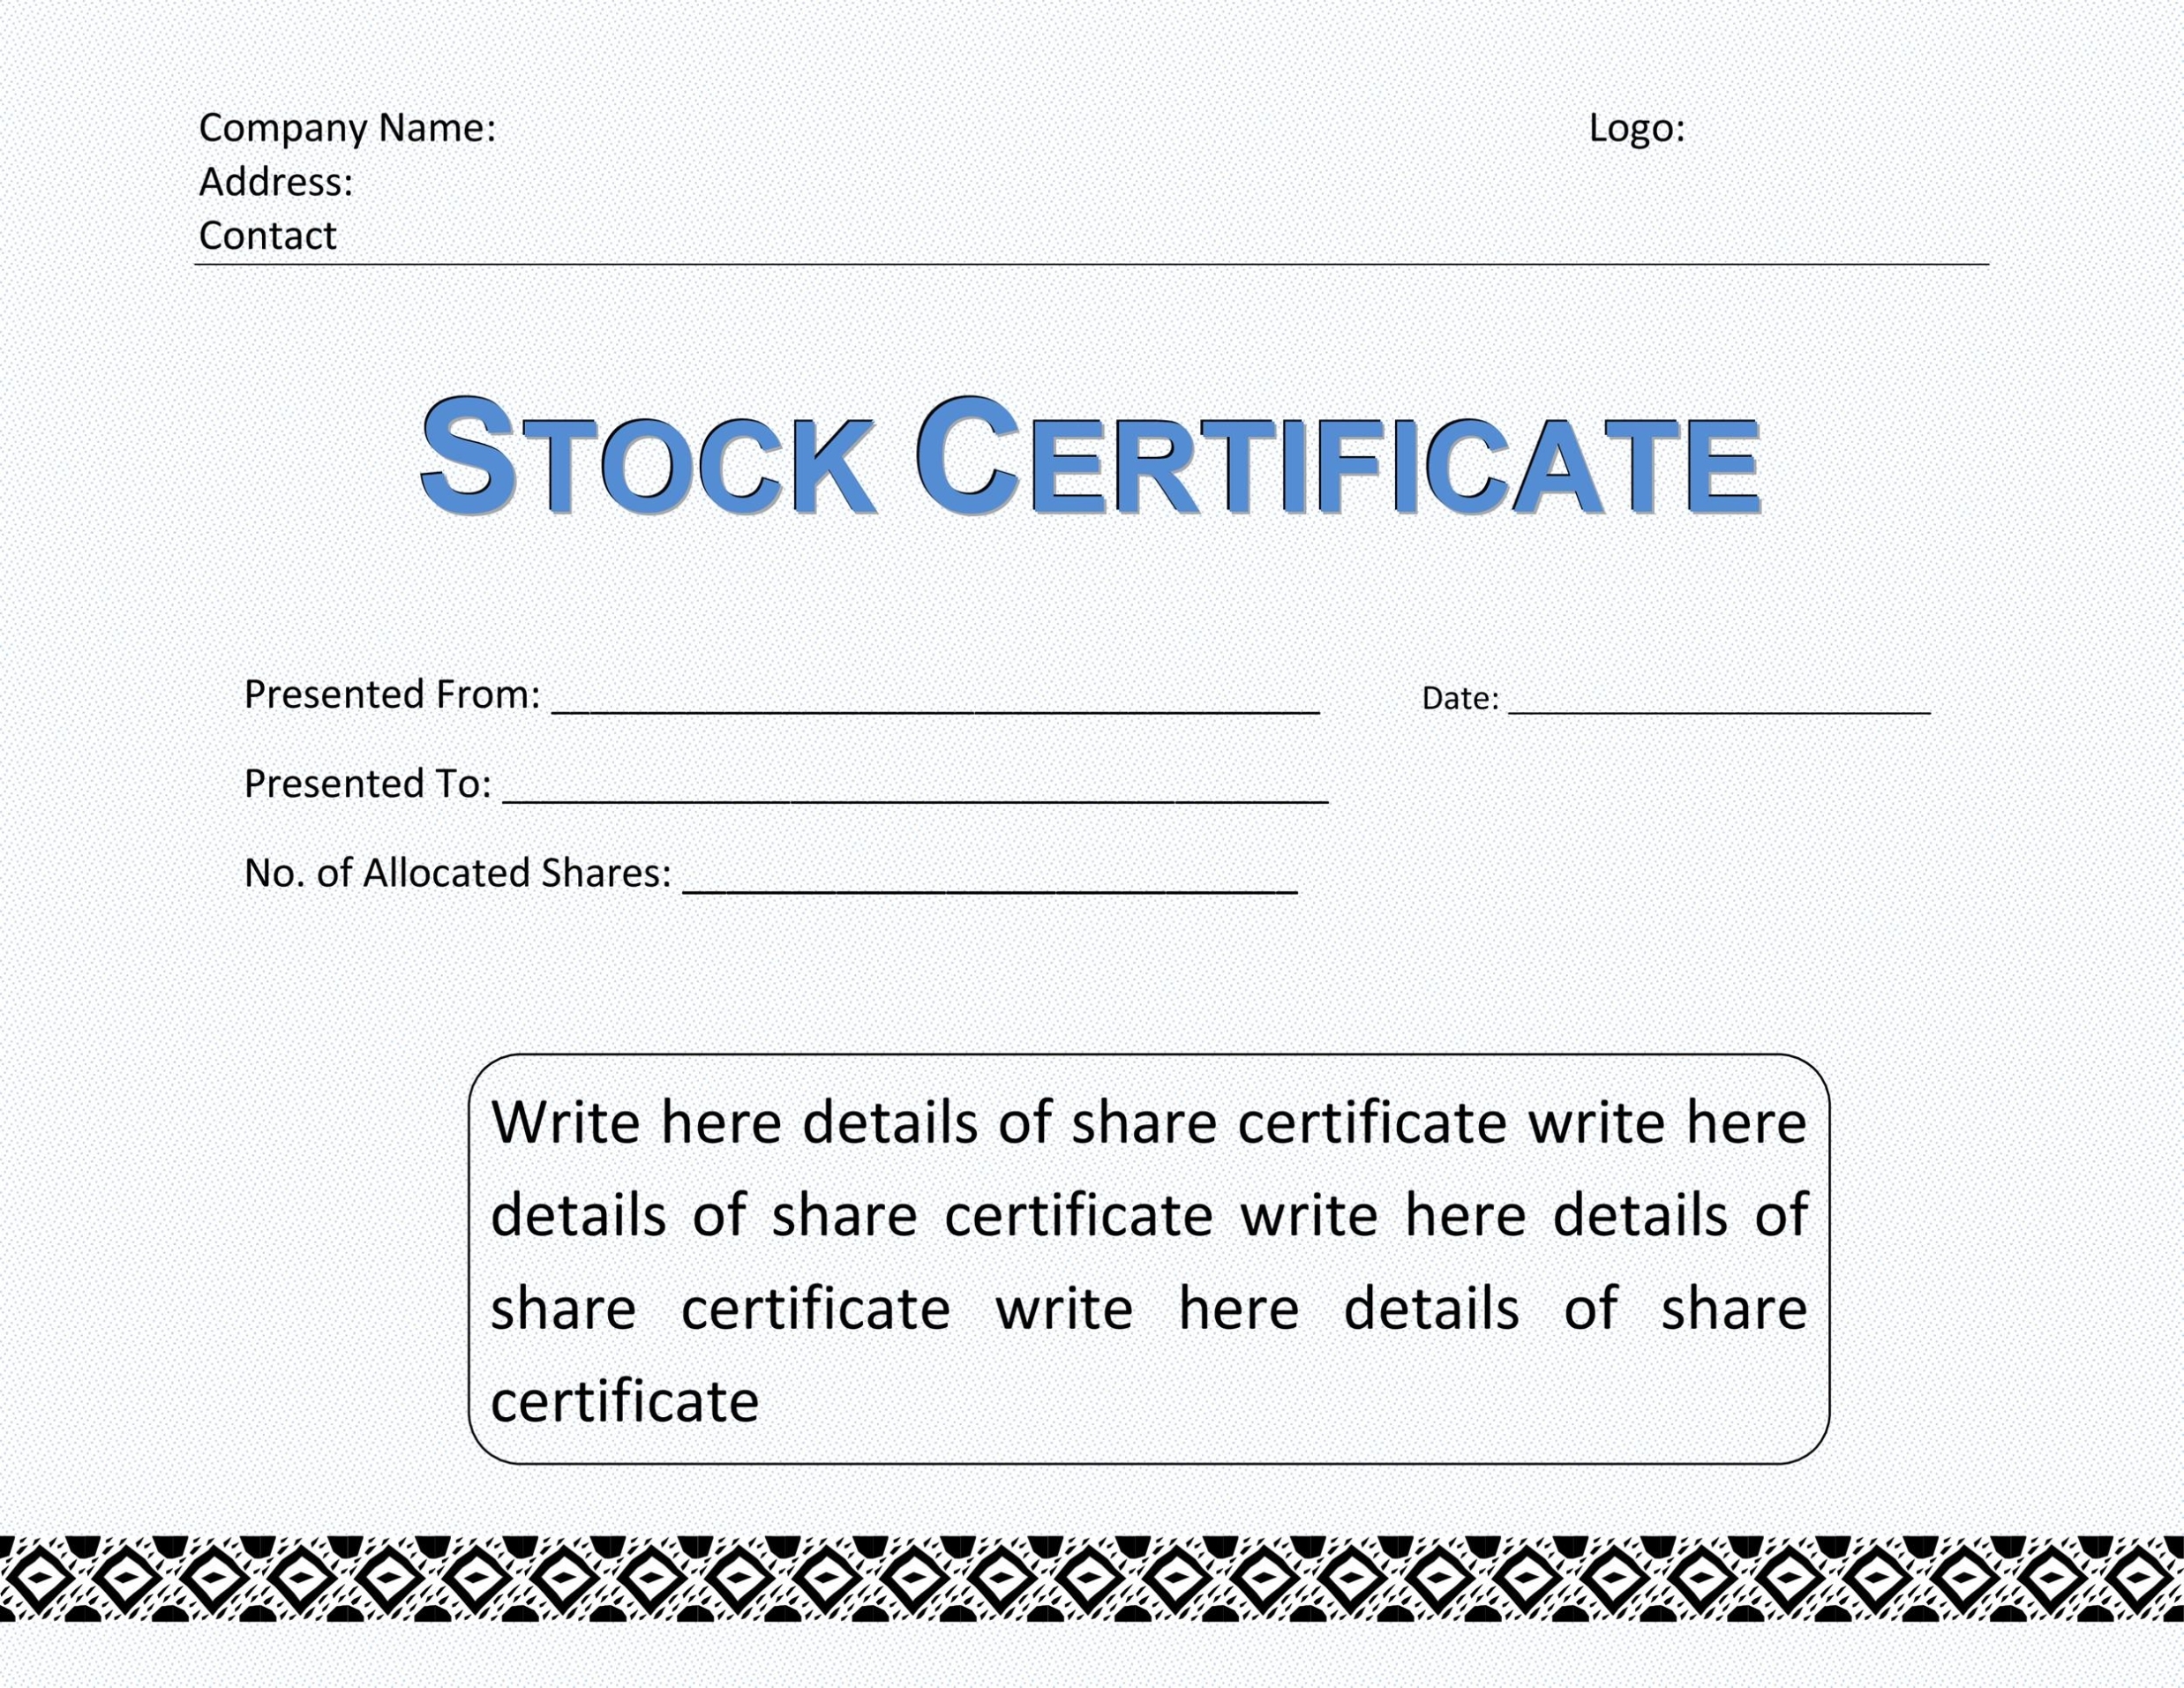 40+ Free Stock Certificate Templates (Word, Pdf) - Template Lab Inside Template For Share Certificate